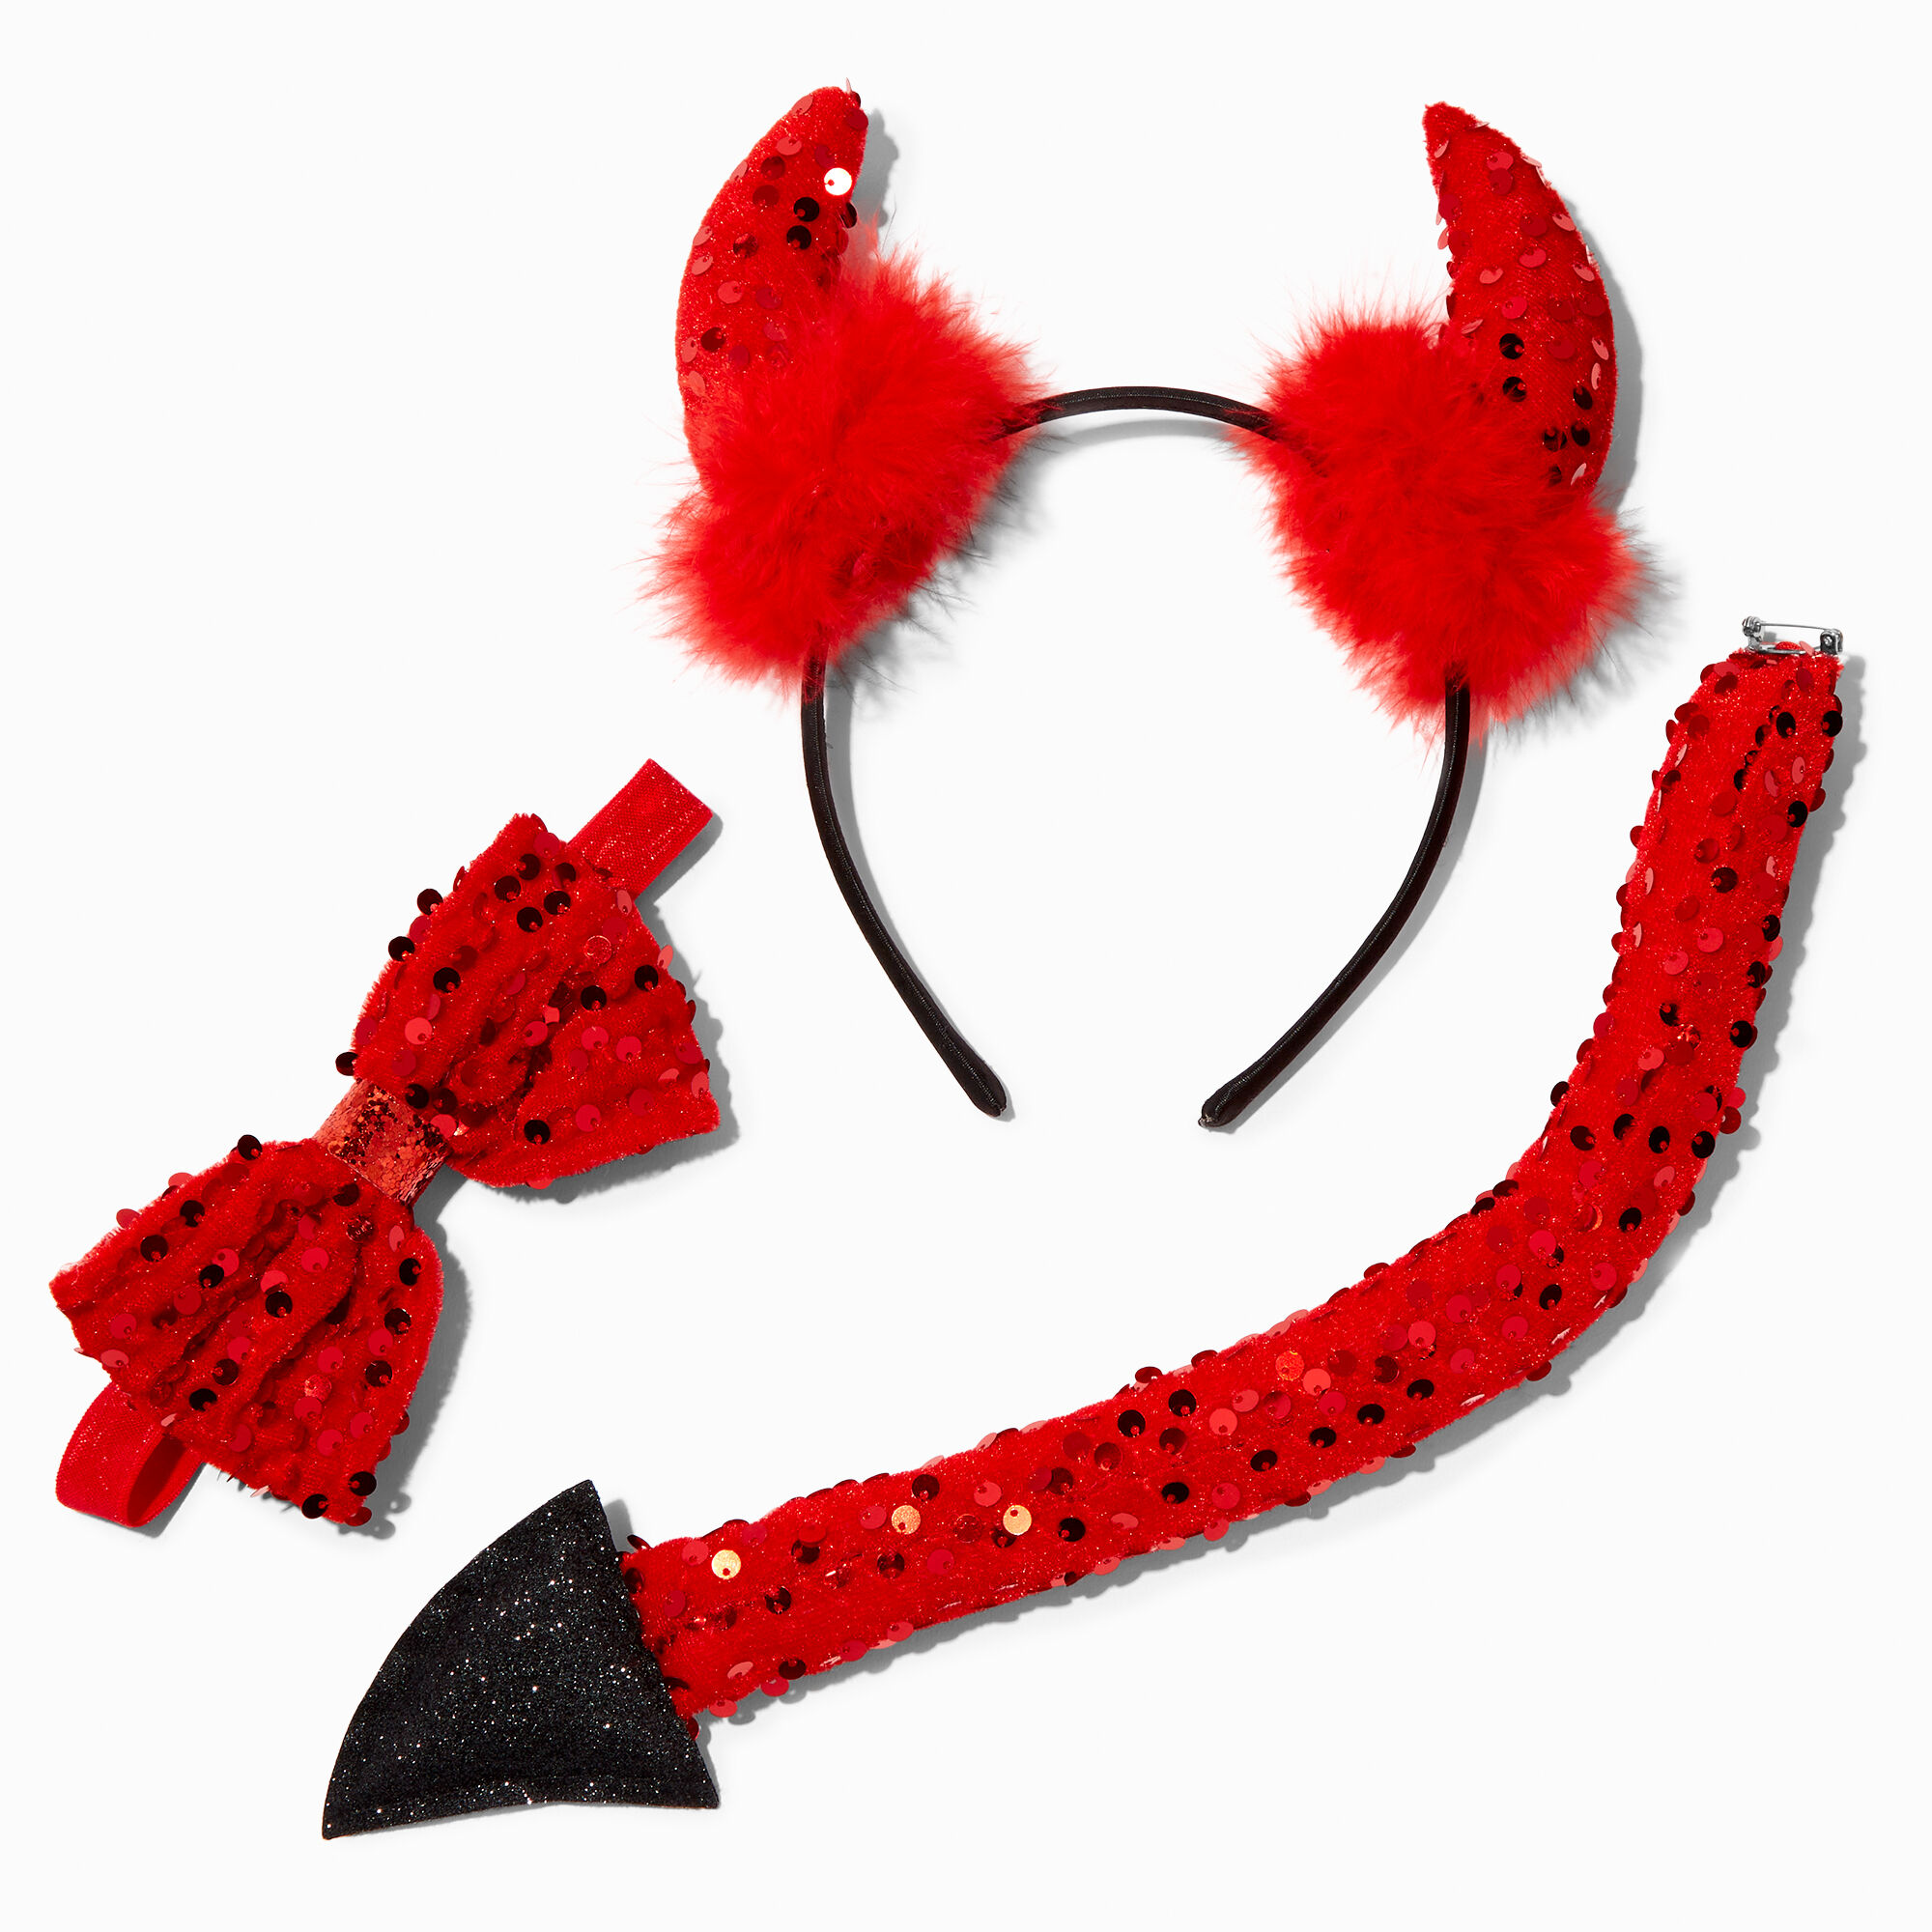 Sequin Red Devil Costume Accessories - 3 Icing US